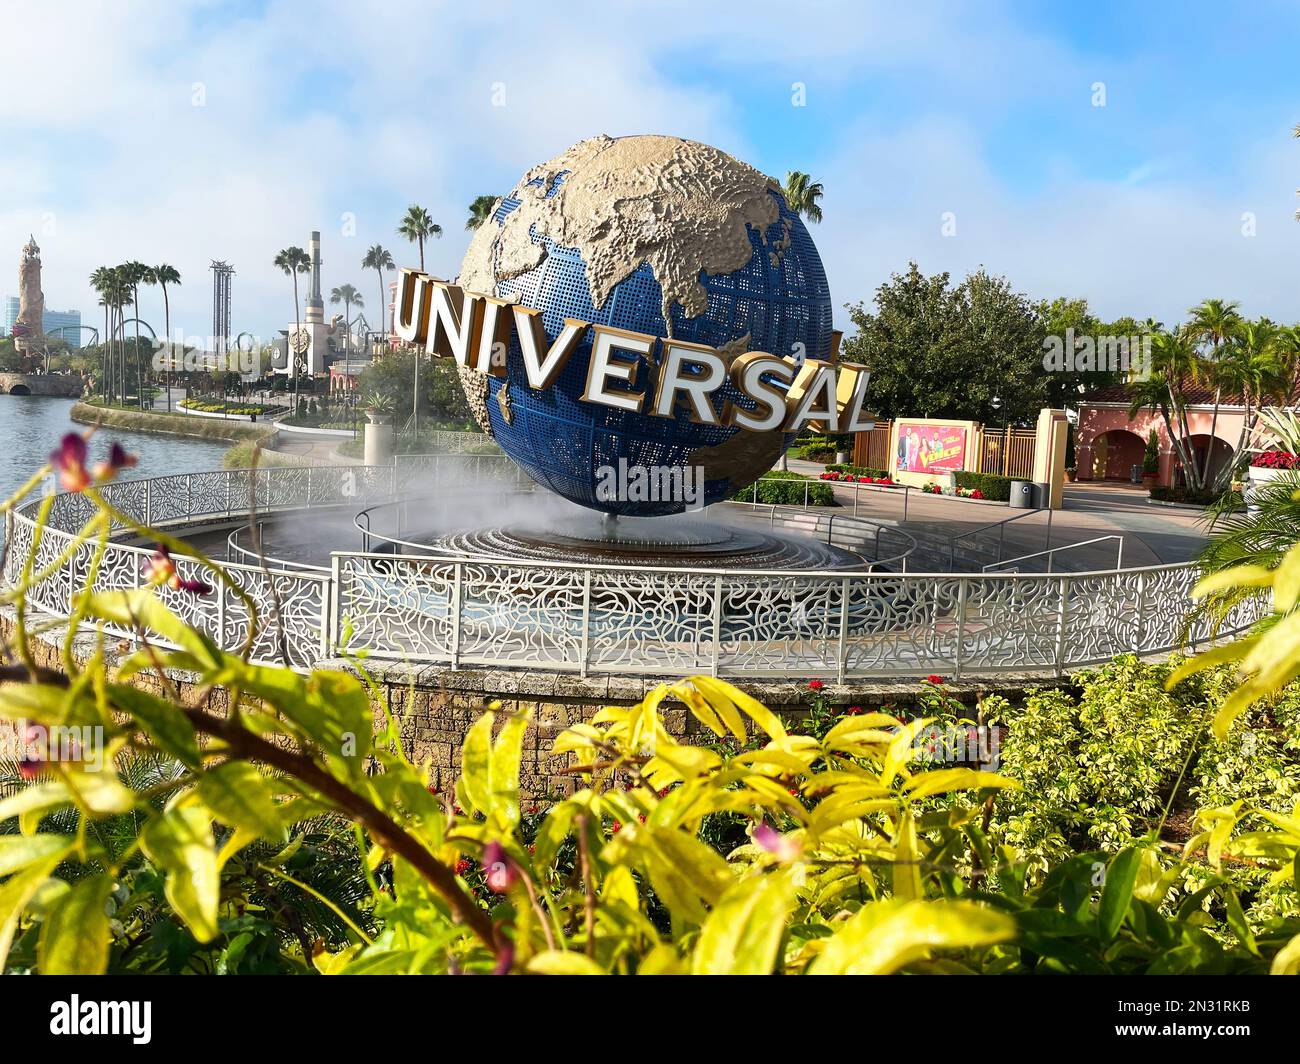 Universal studios florida Stock Photo